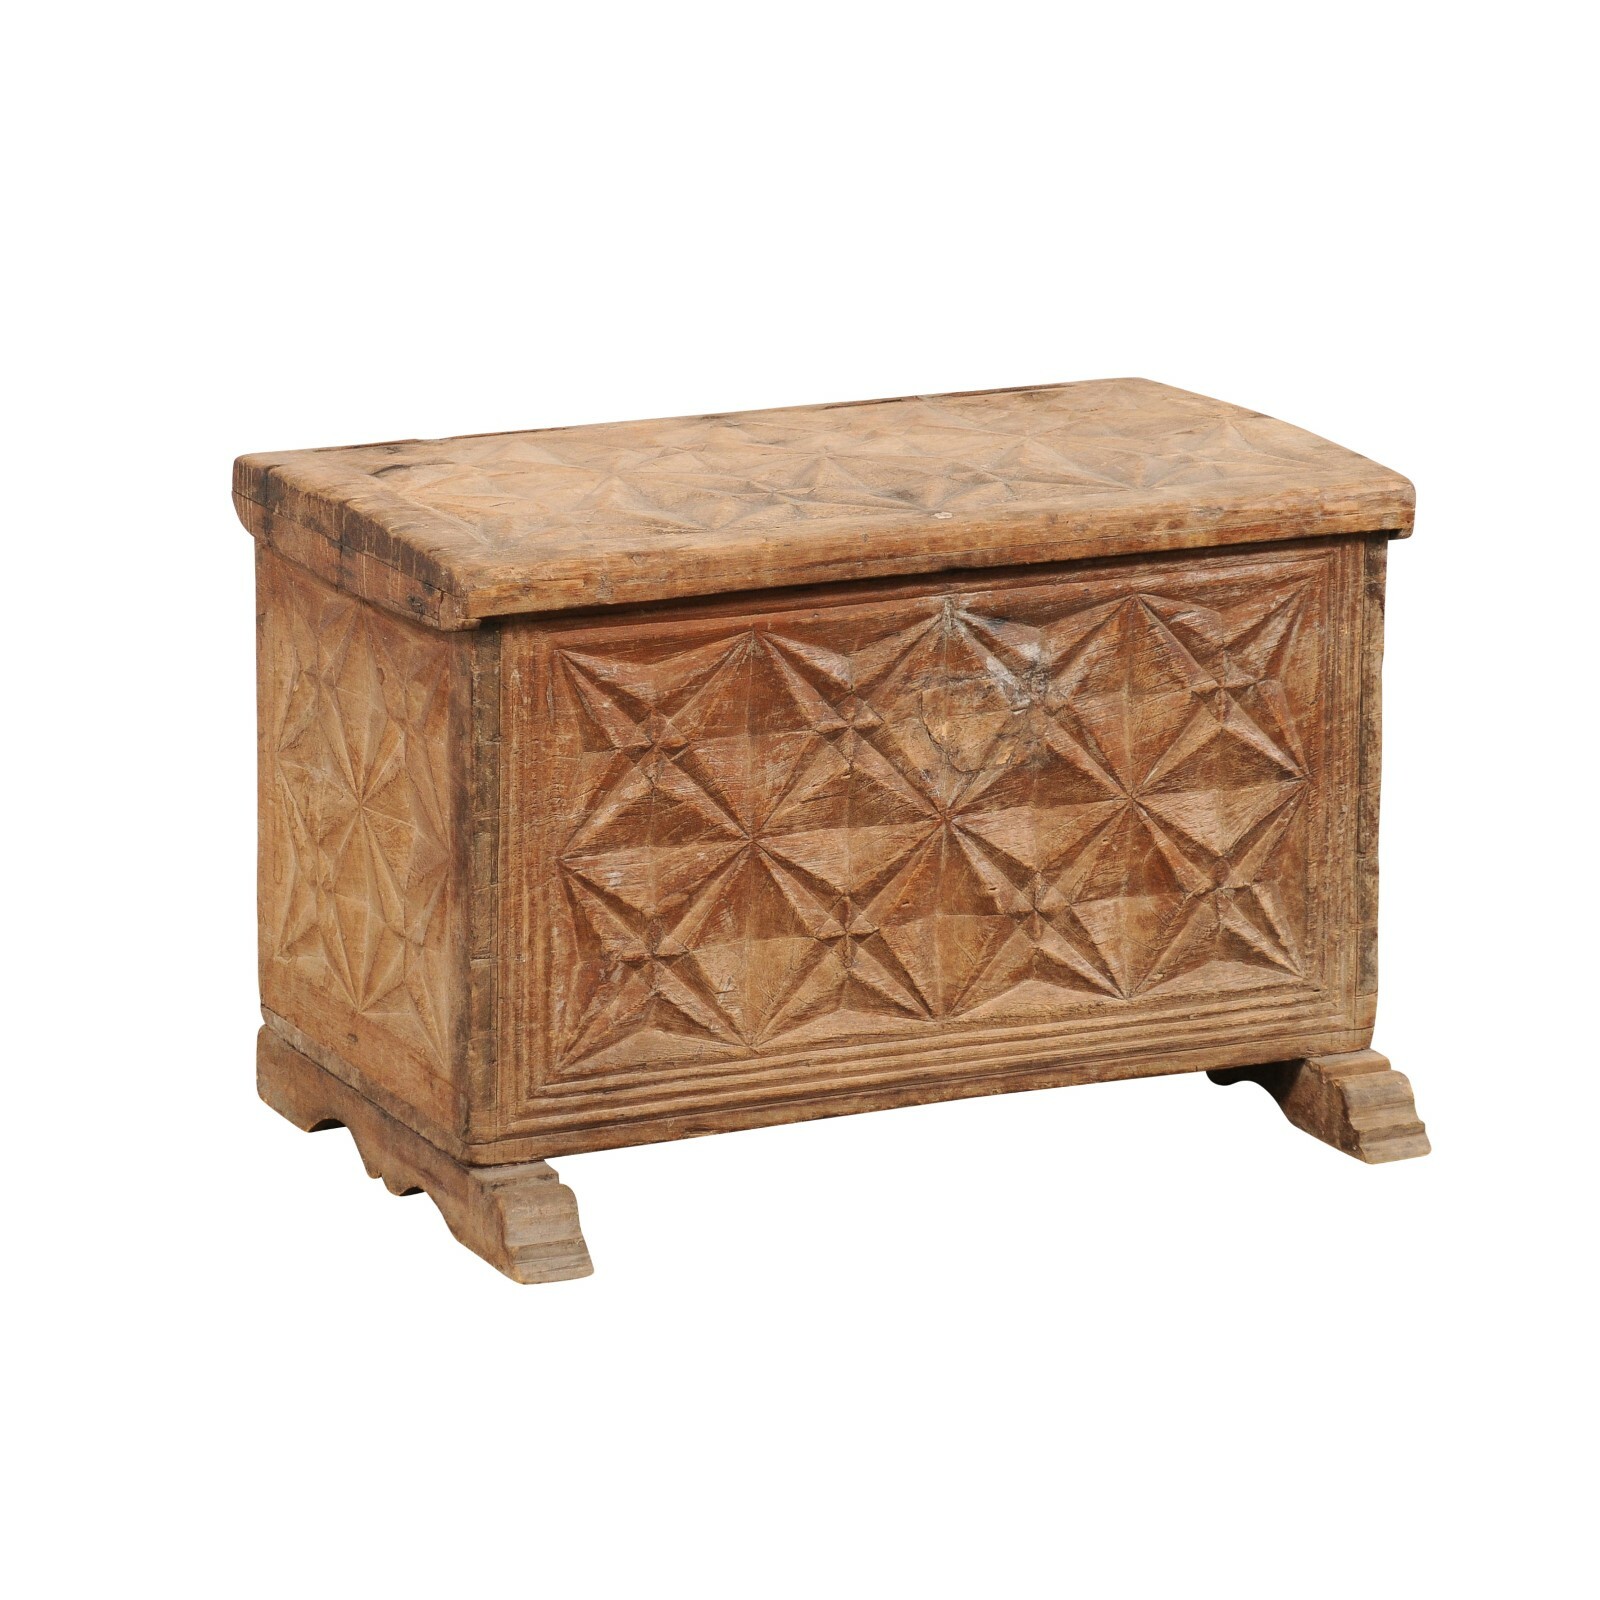 19th C. Moorish Carved-Wood Box, Spain